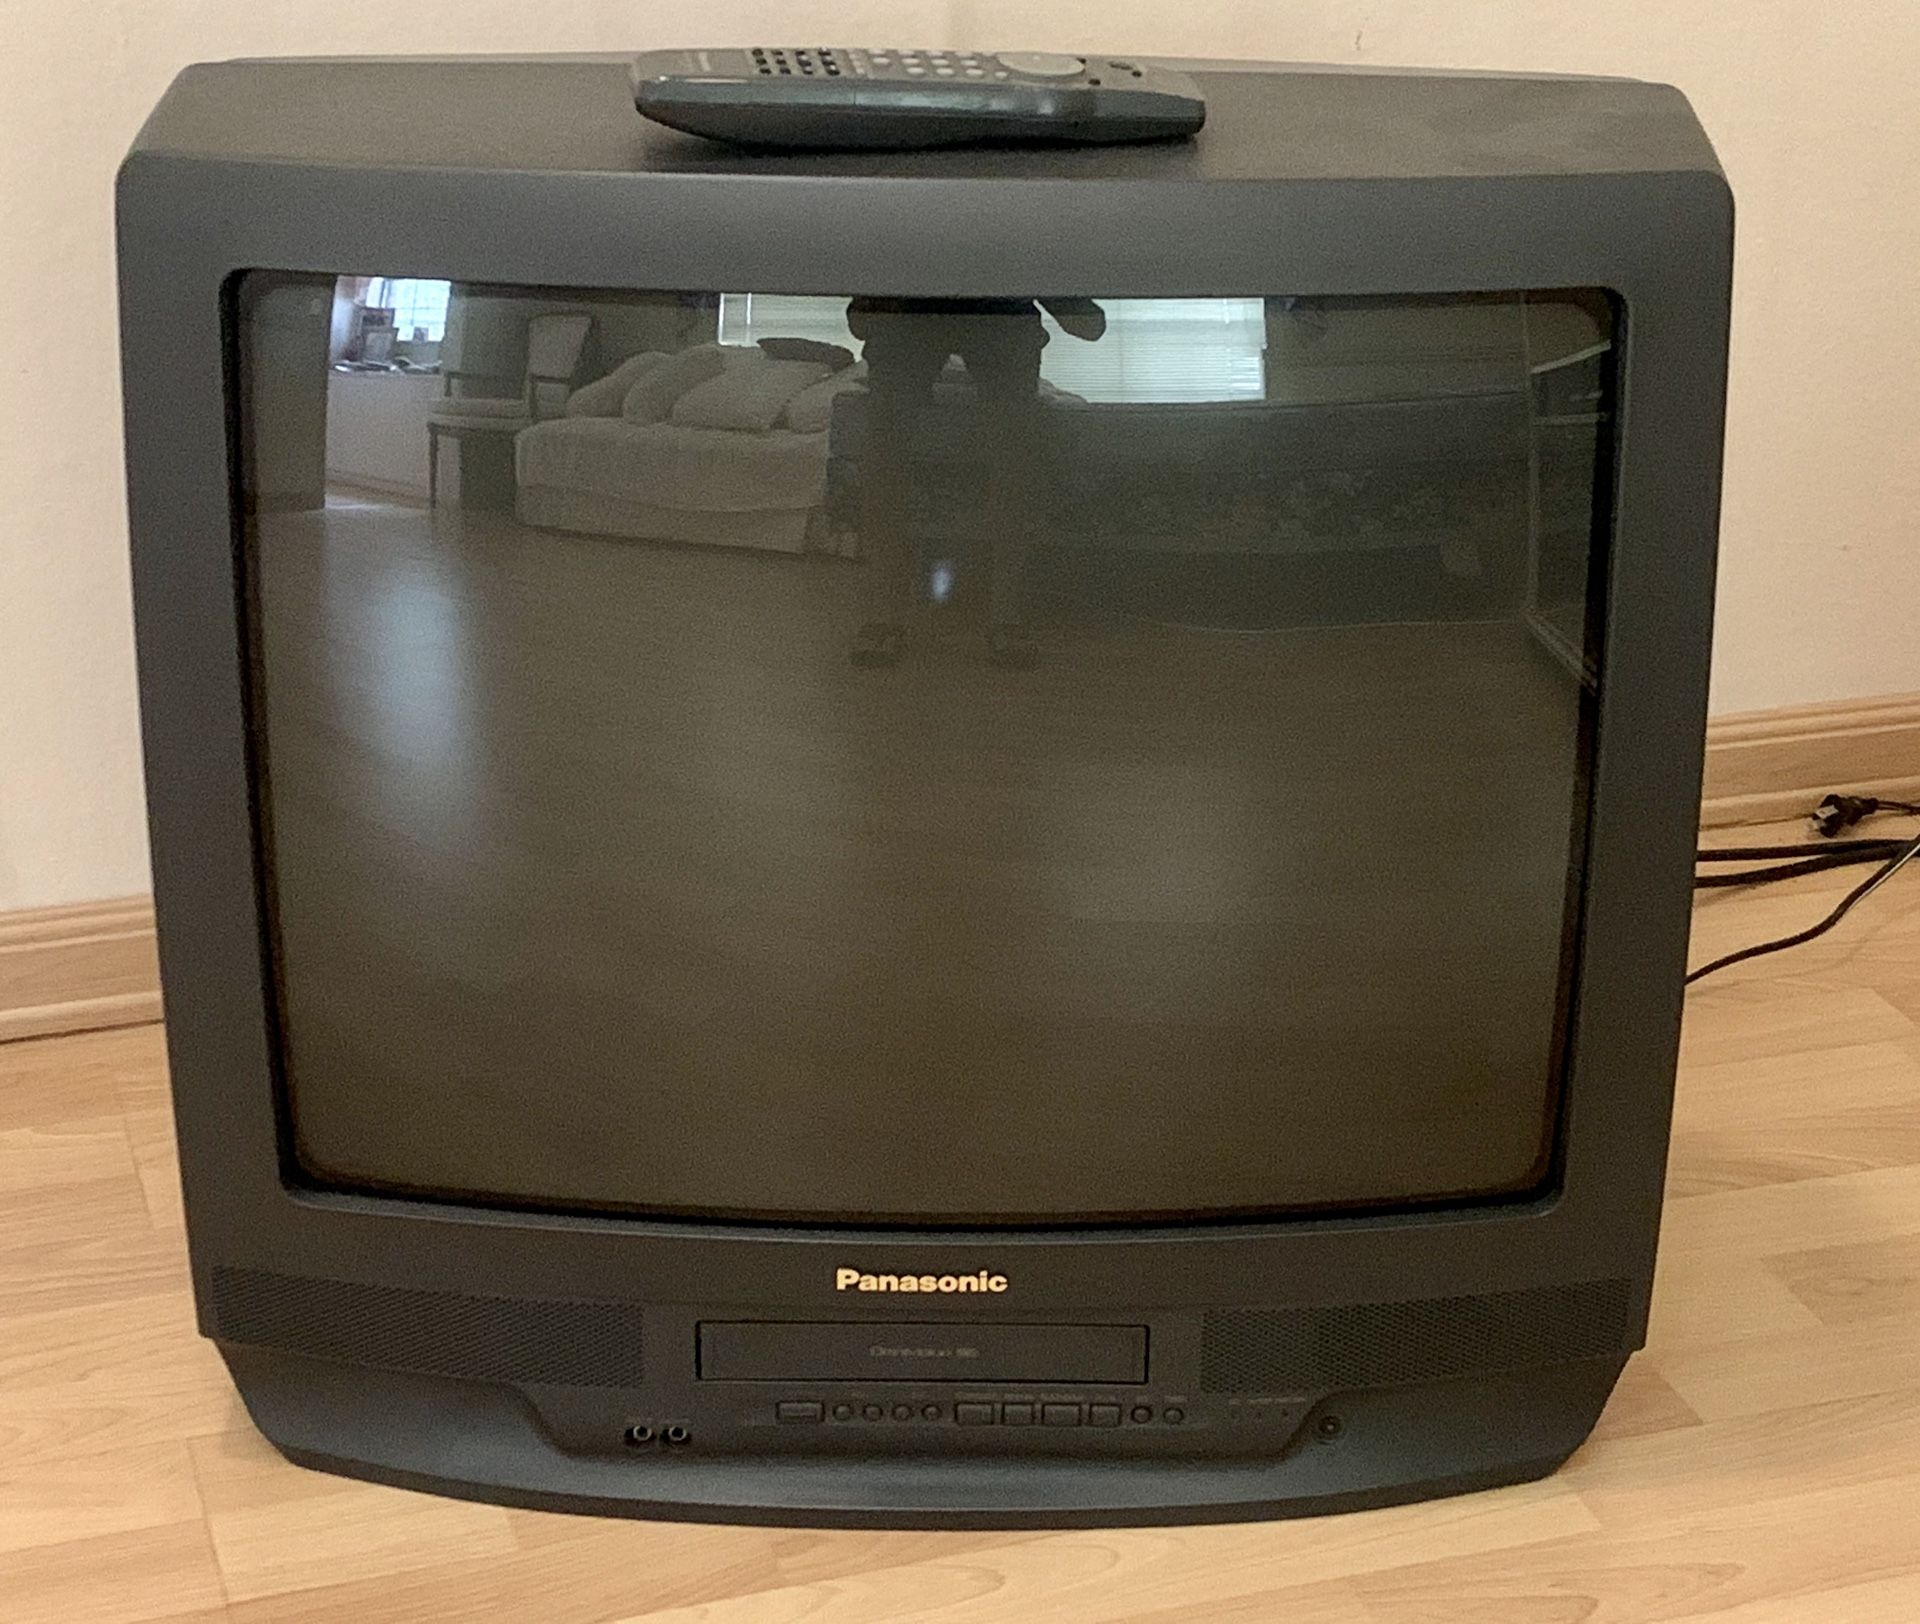 Panasonic TV/VCR - 26” TV with VHS VCR